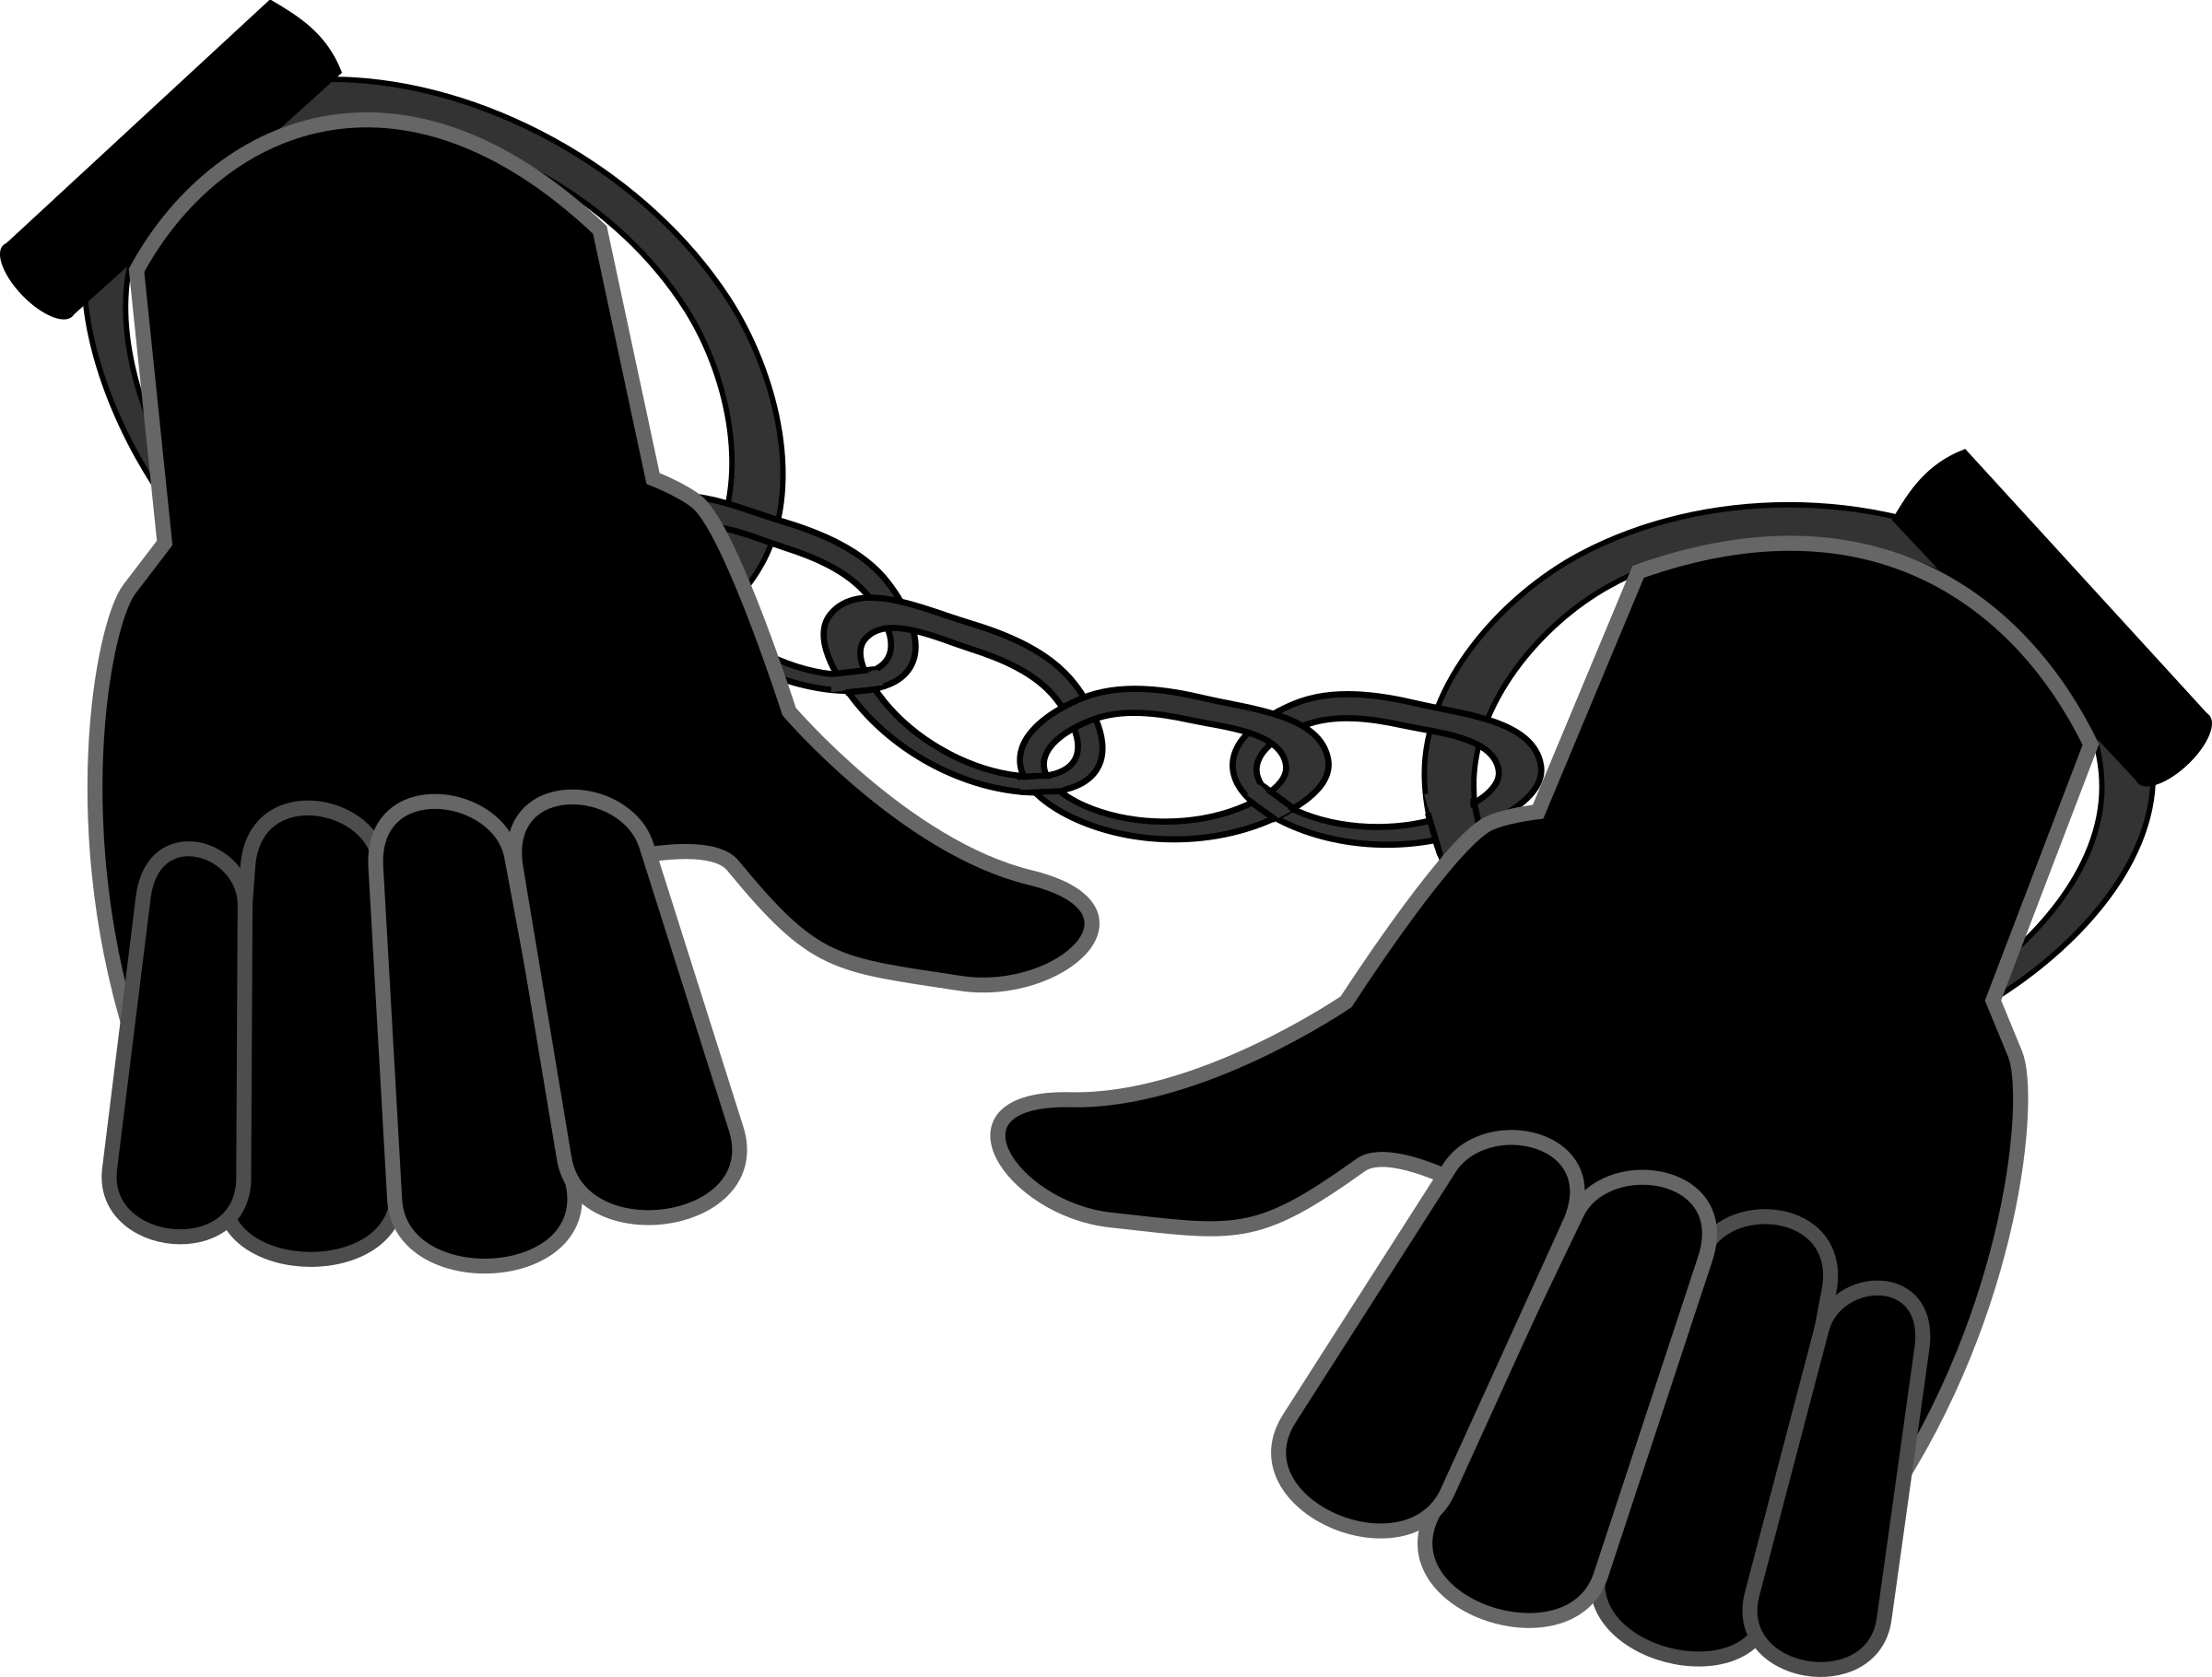 Handcuffed hands vector illus